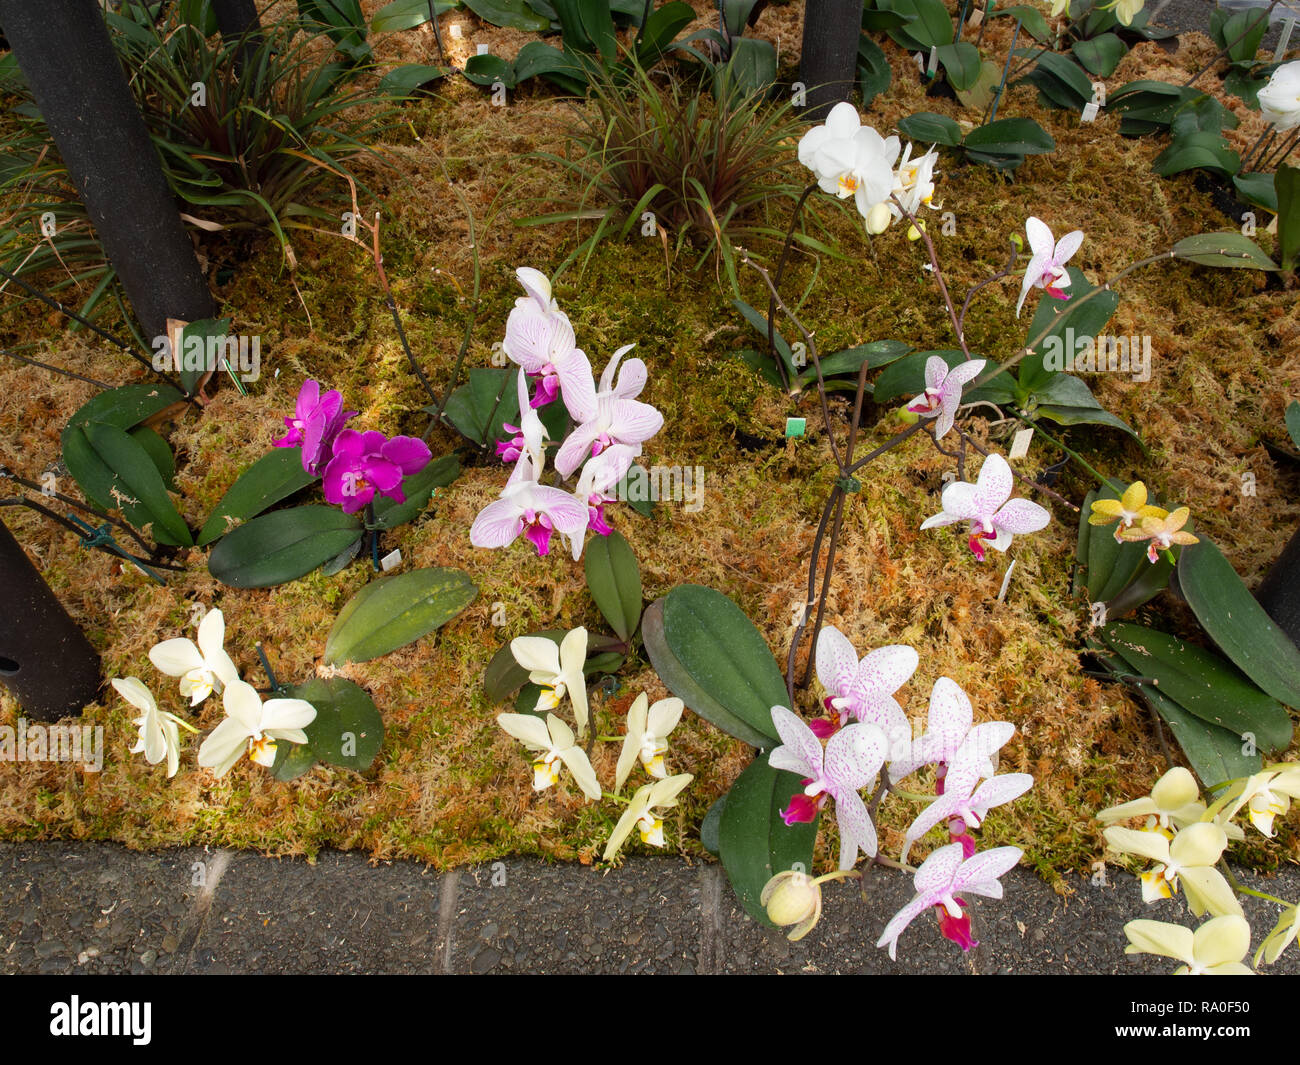 Small Pretty Flowers In A Garden Stock Photo